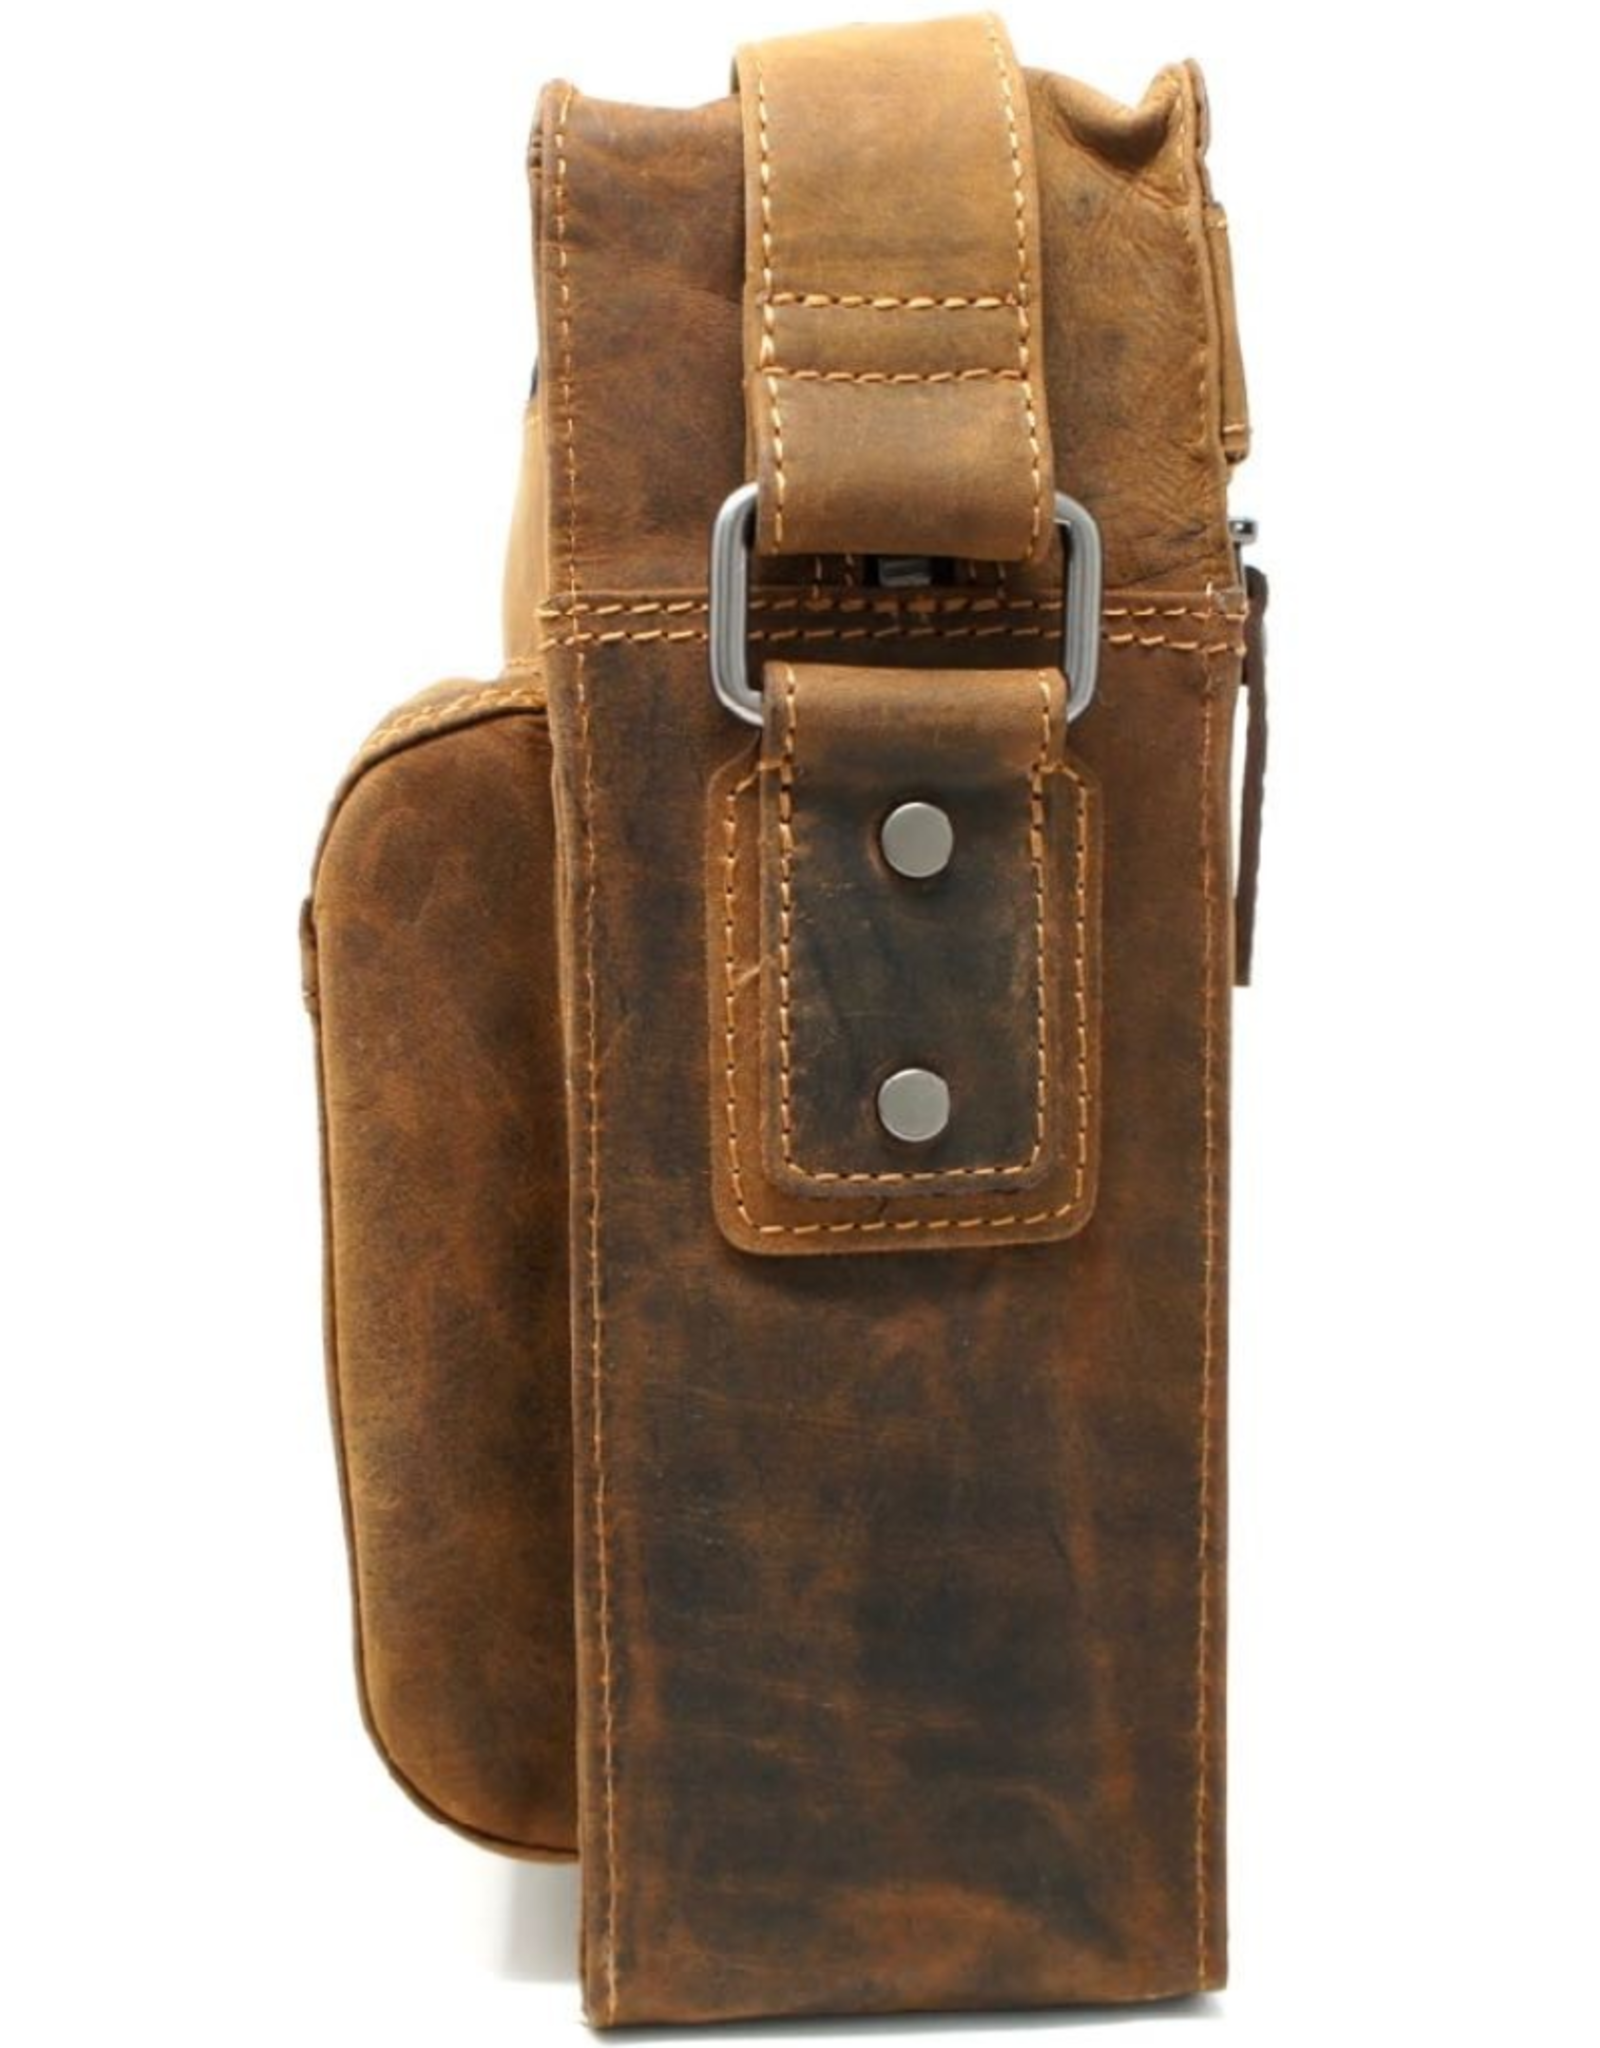 HillBurry Leather bags -  HillBurry Unisex Leather Shoulder Bag (rectangle model)